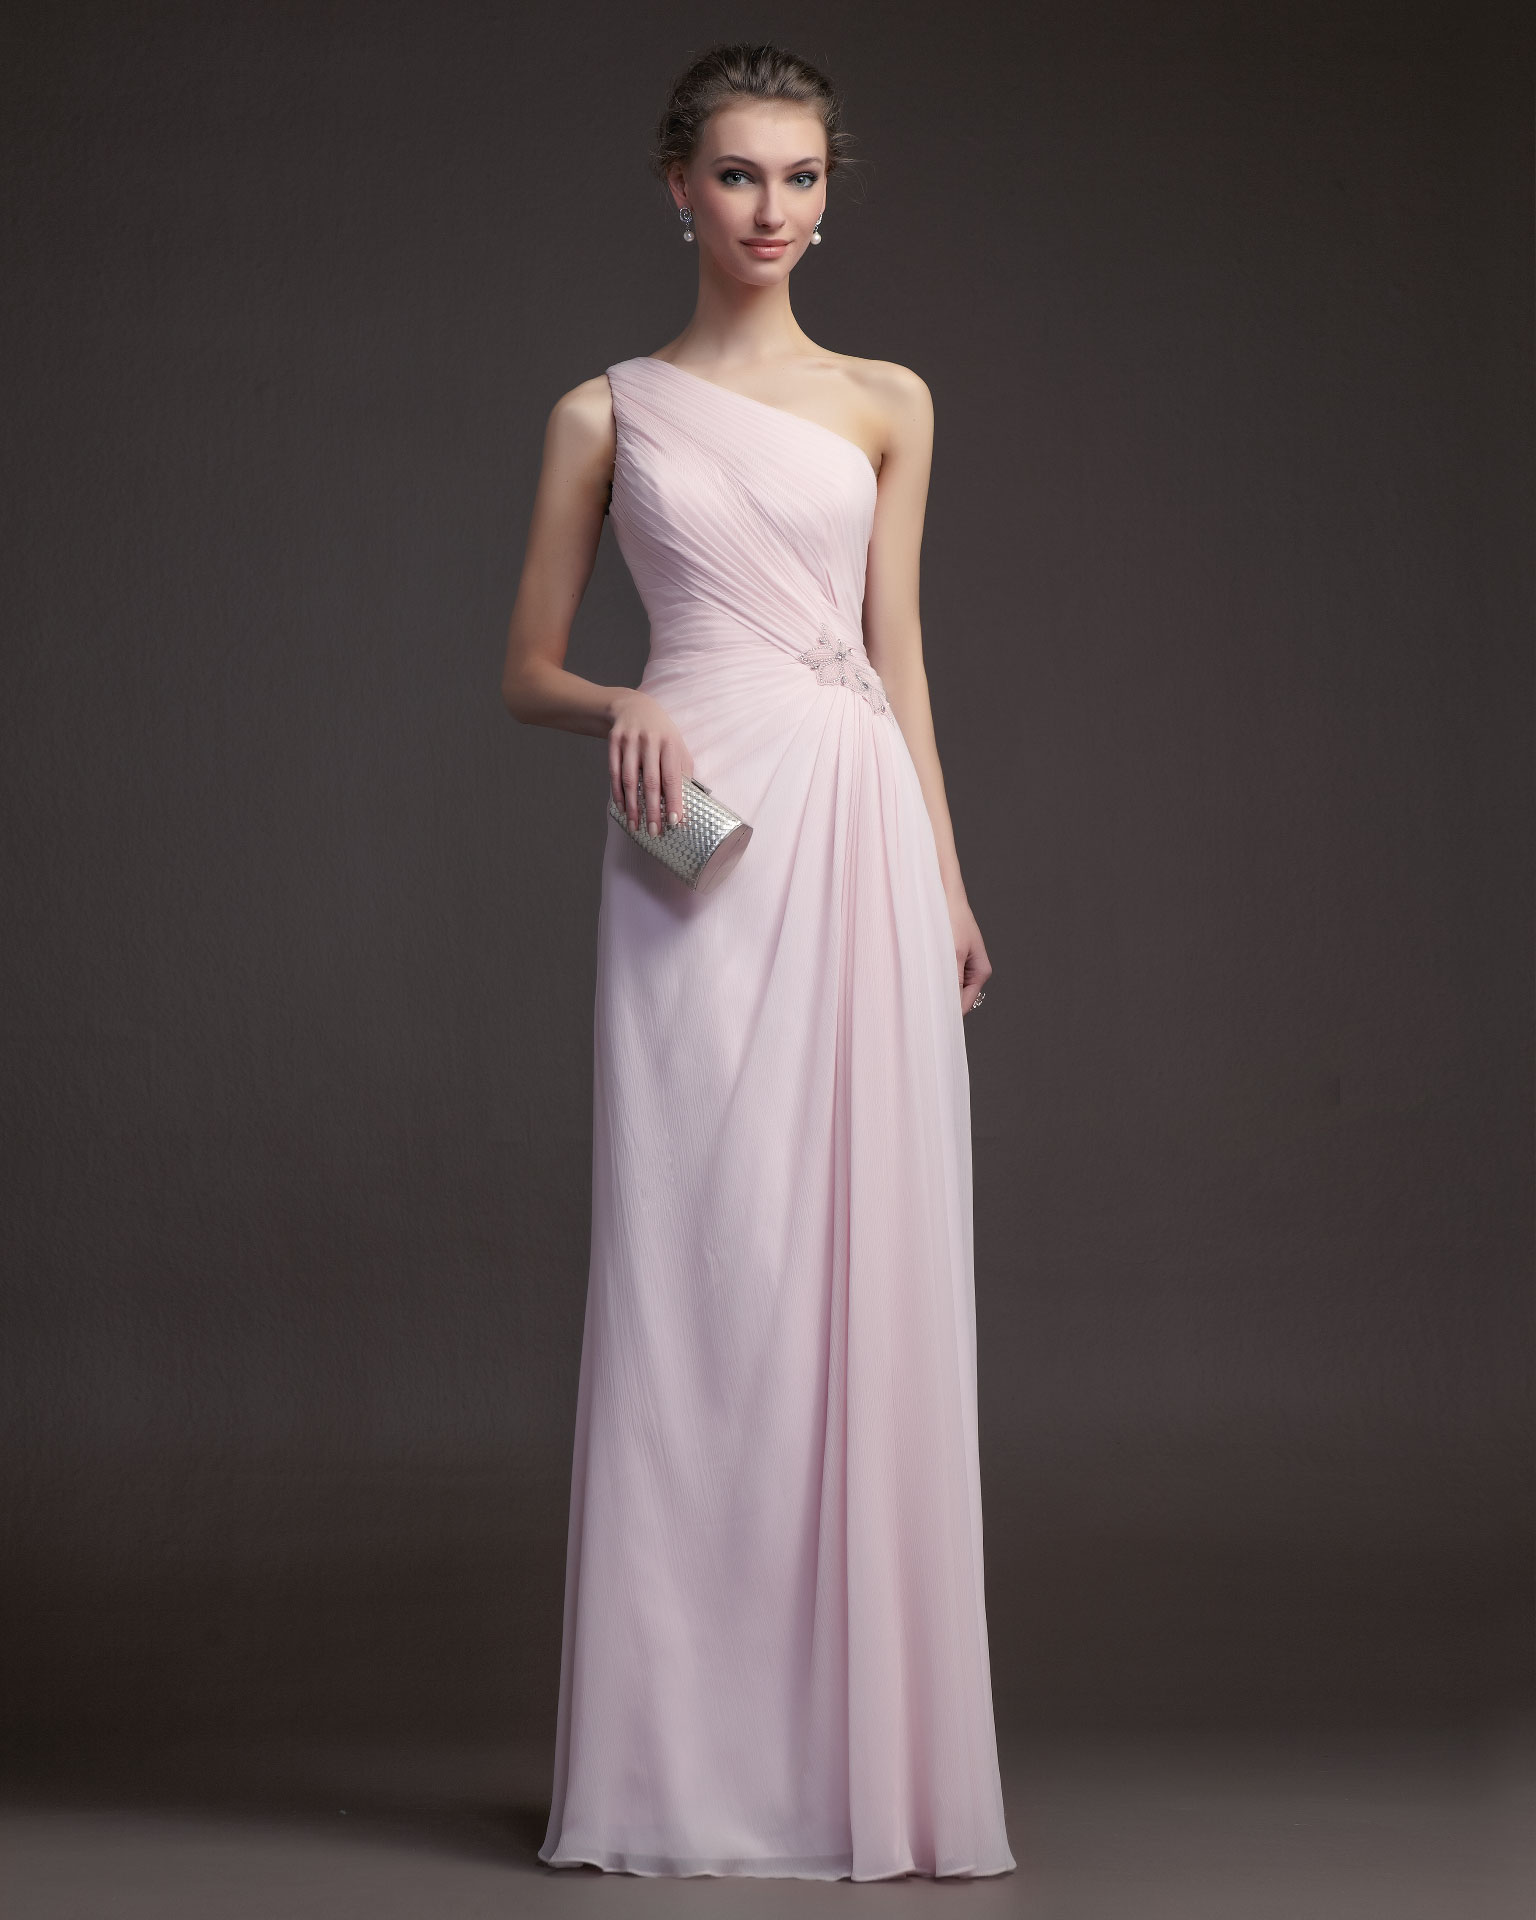 Charming Sheath/Column One Shoulder Beading Floor-length Chiffon Prom Dresses